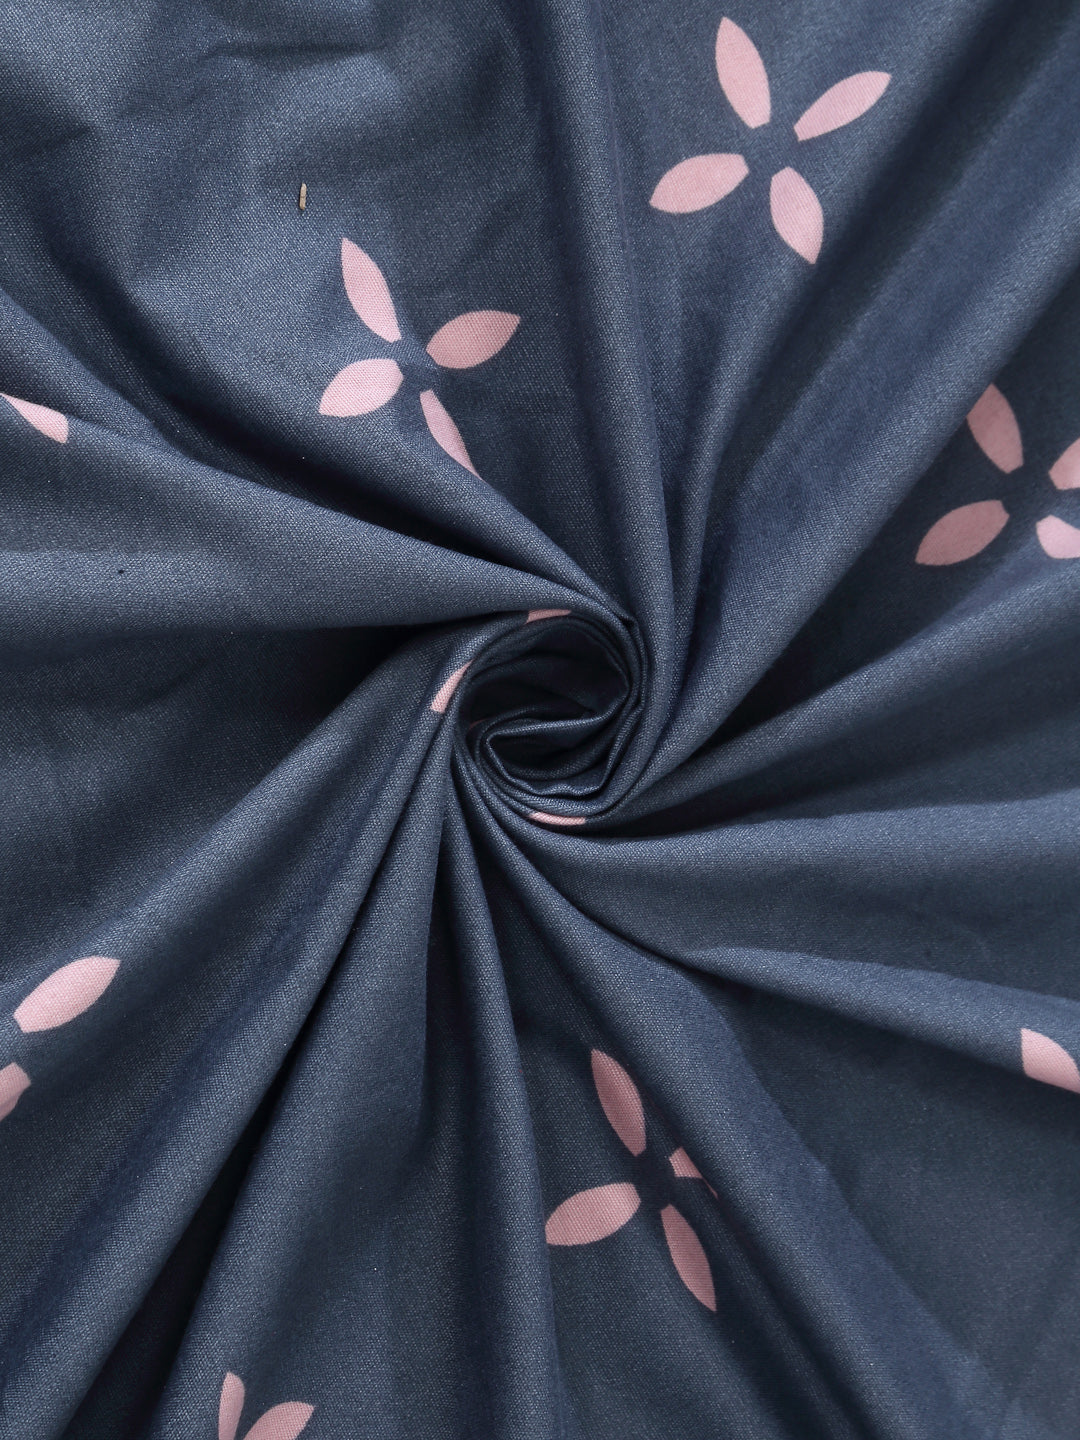 Arrabi Grey Leaf TC Cotton Blend King Size Bedsheet with 2 Pillow Covers (250 X 215 cm)